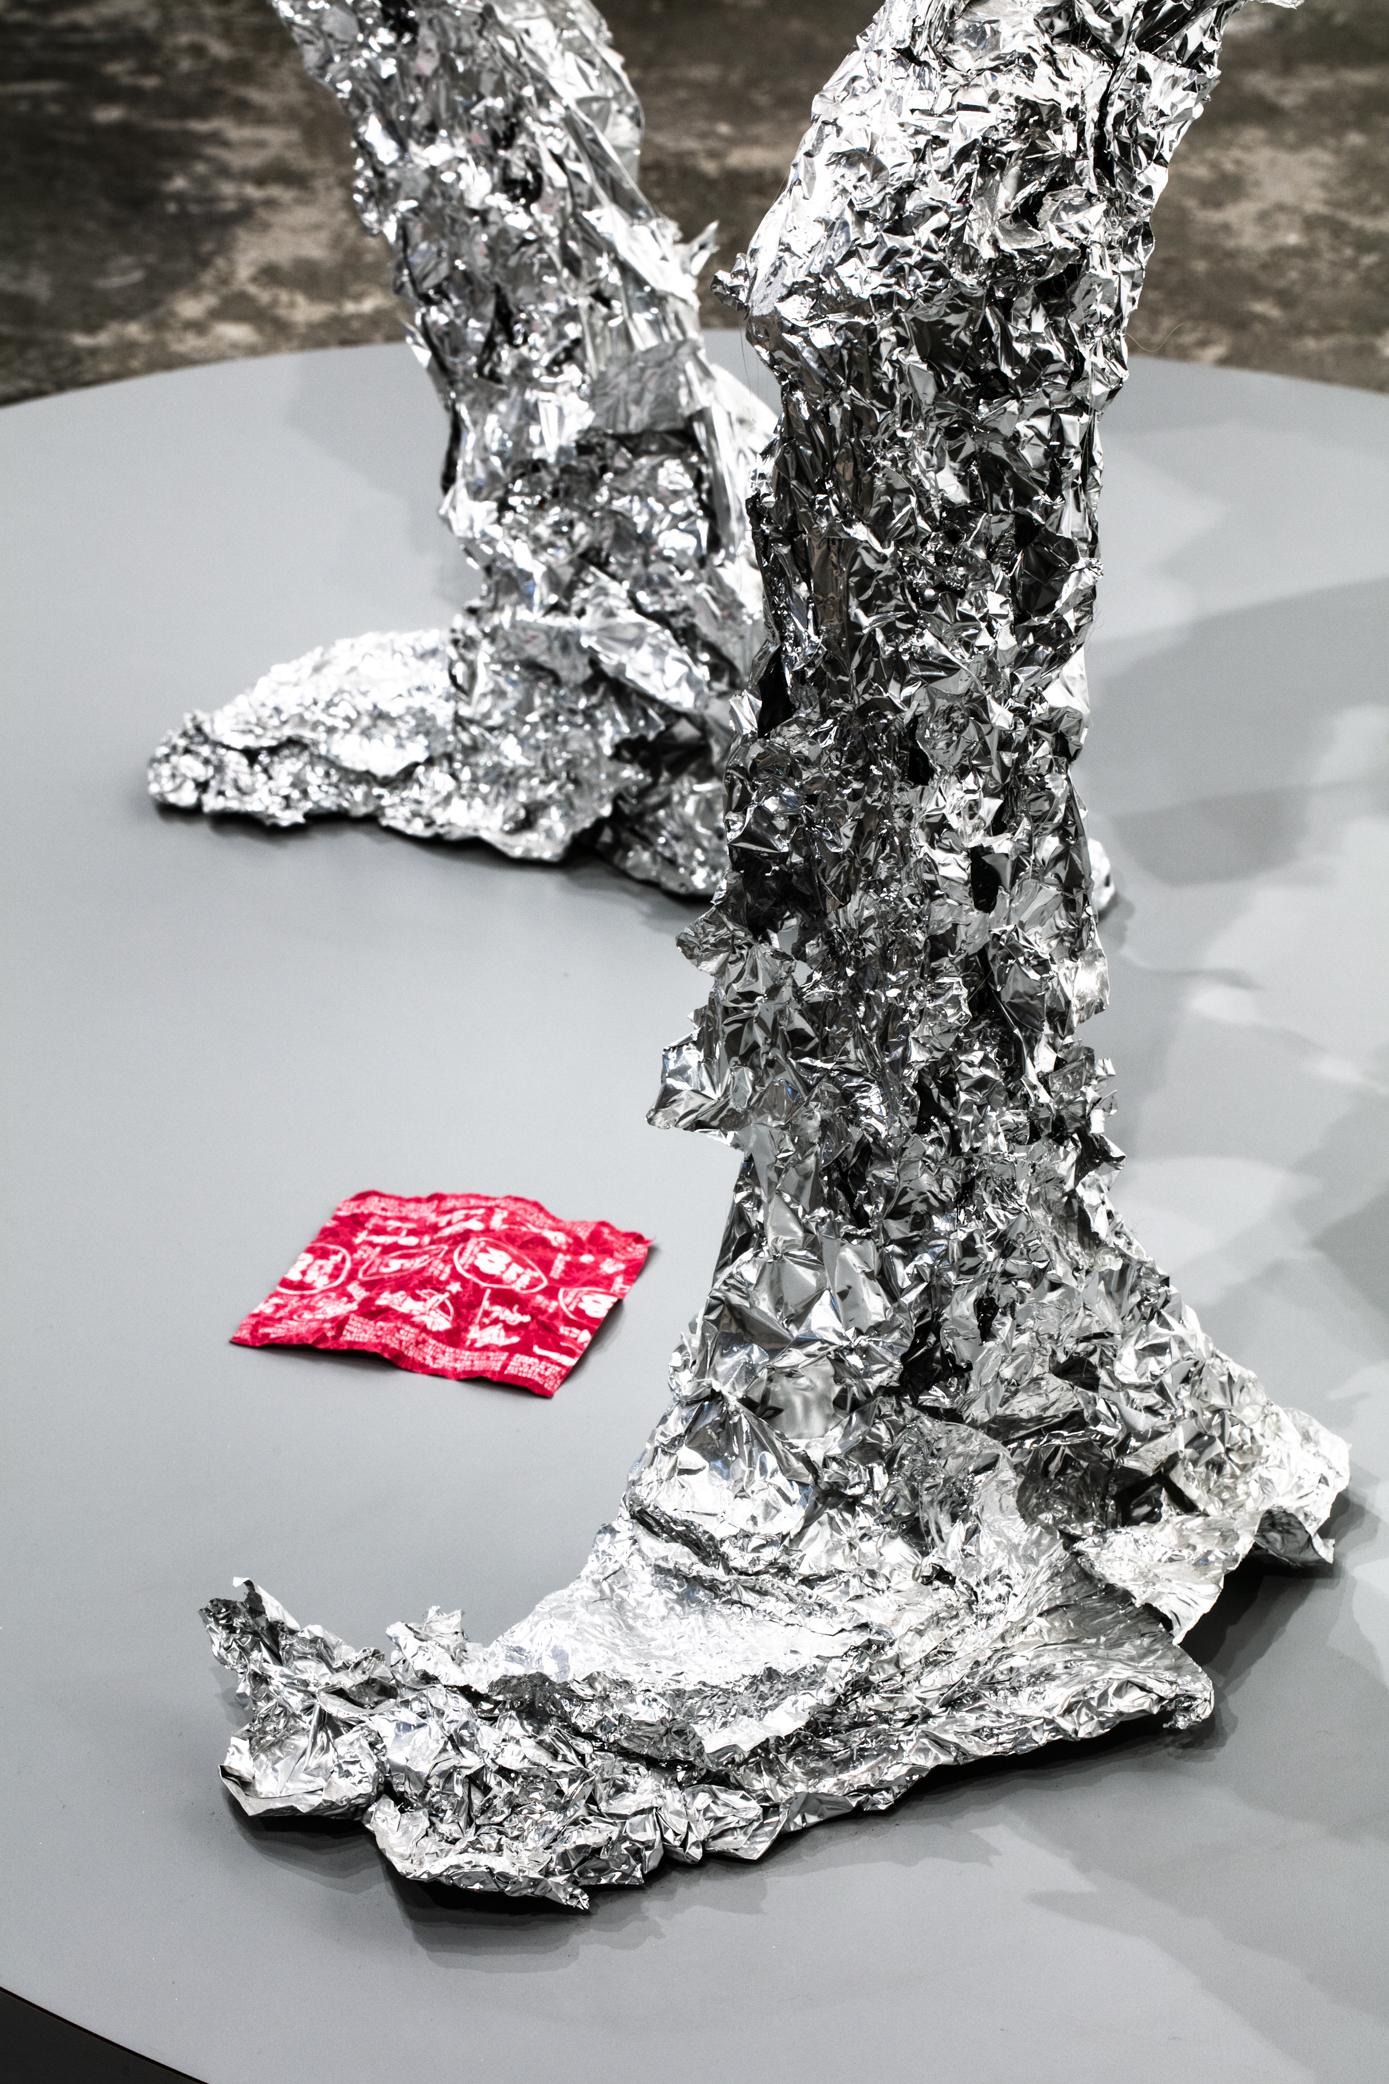 Tom Friedman
Untitled, 2004
Wood, aluminum foil, lollipop and tootsie pop wrapper
67.5 x 61 x 48.75 inches